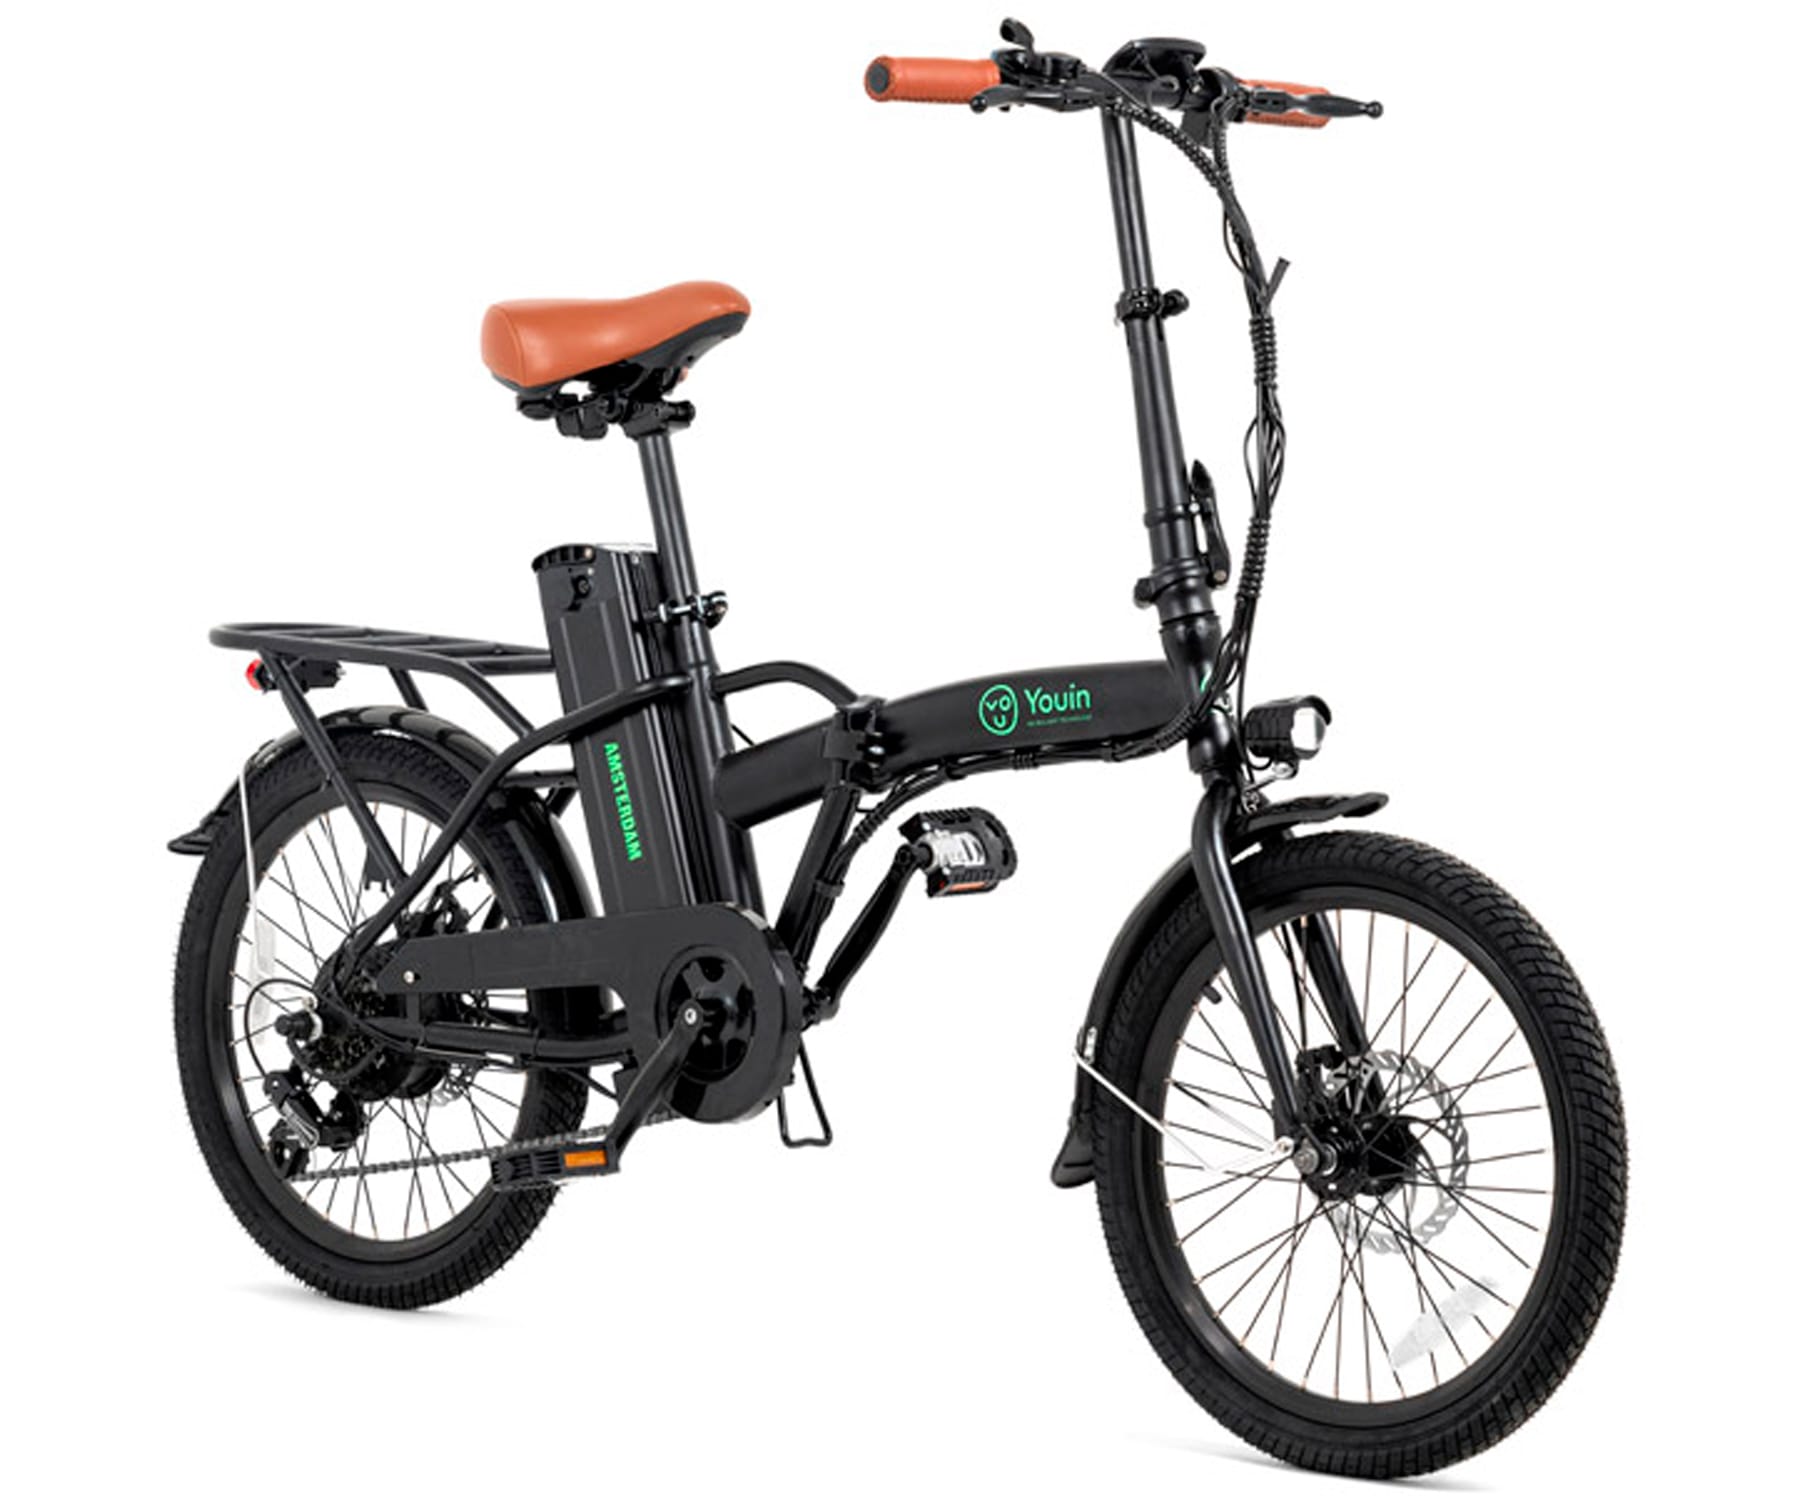 Youin You-Ride Amsterdam Bicicleta eléctrica